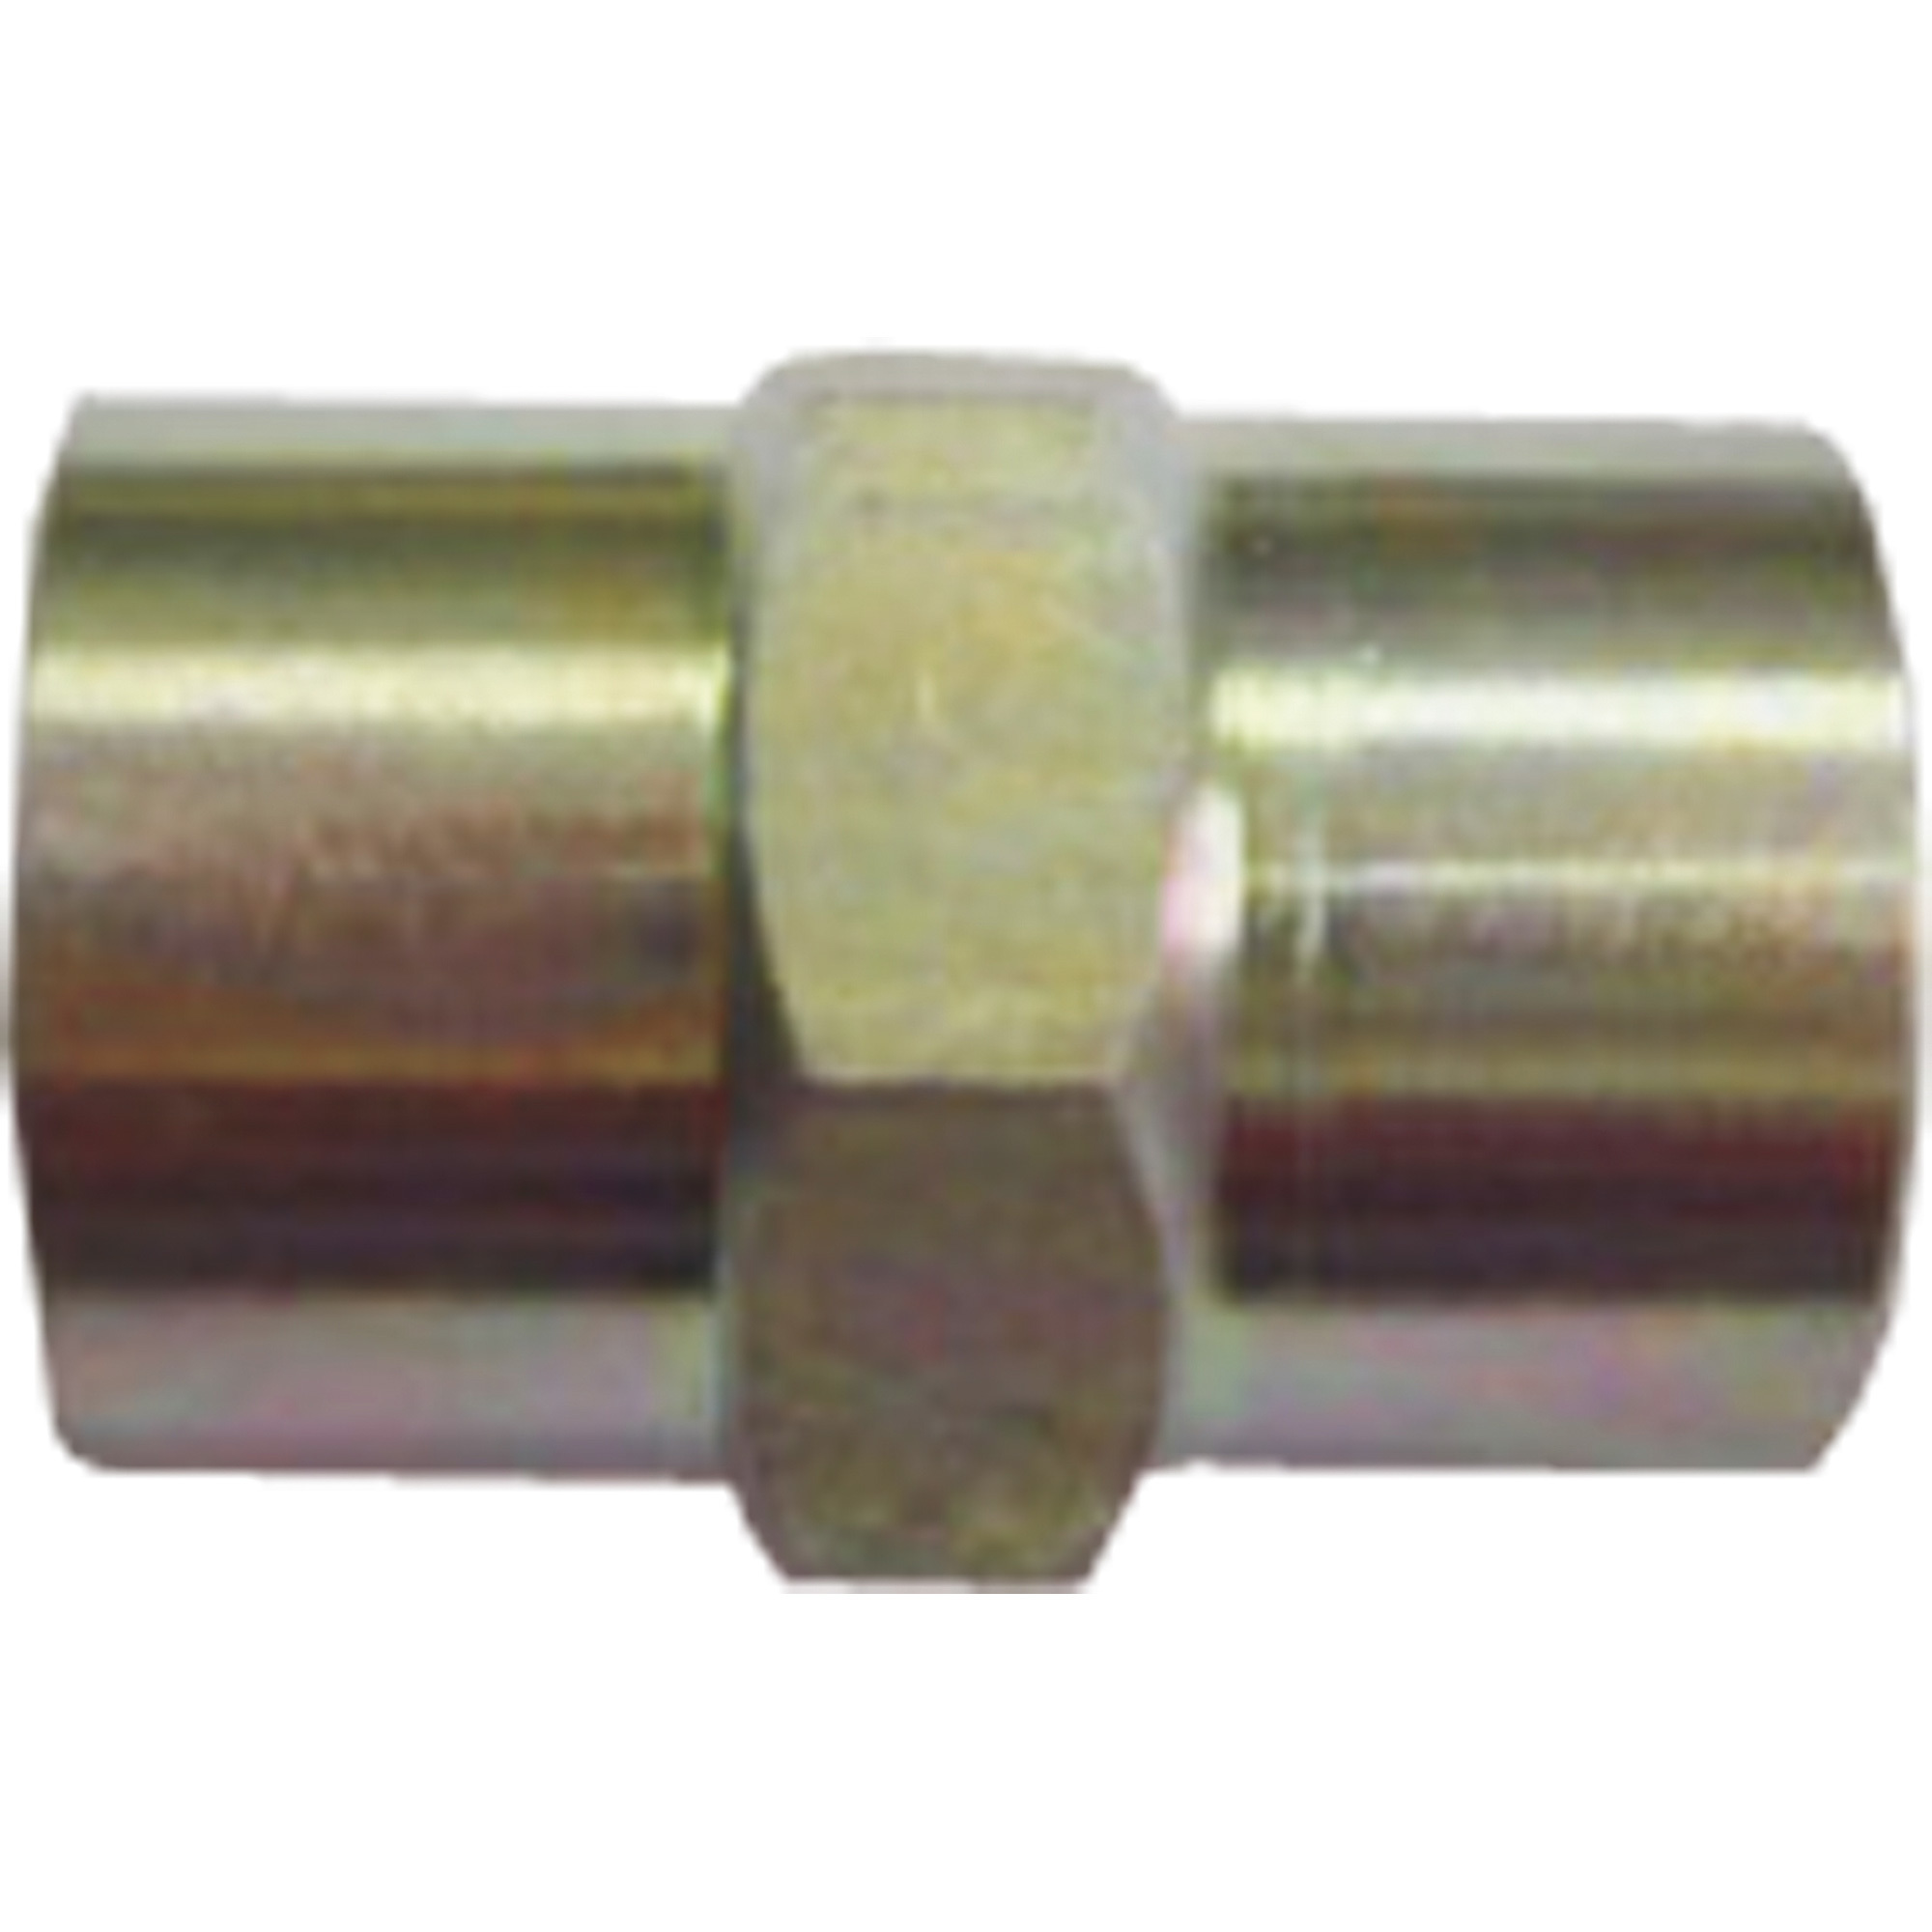 General Pump Steel Zinc-Plated Union Connector â 1/4Inch NPT-F x 1/4Inch NPT-F, 4000 PSI, Model 2530047P